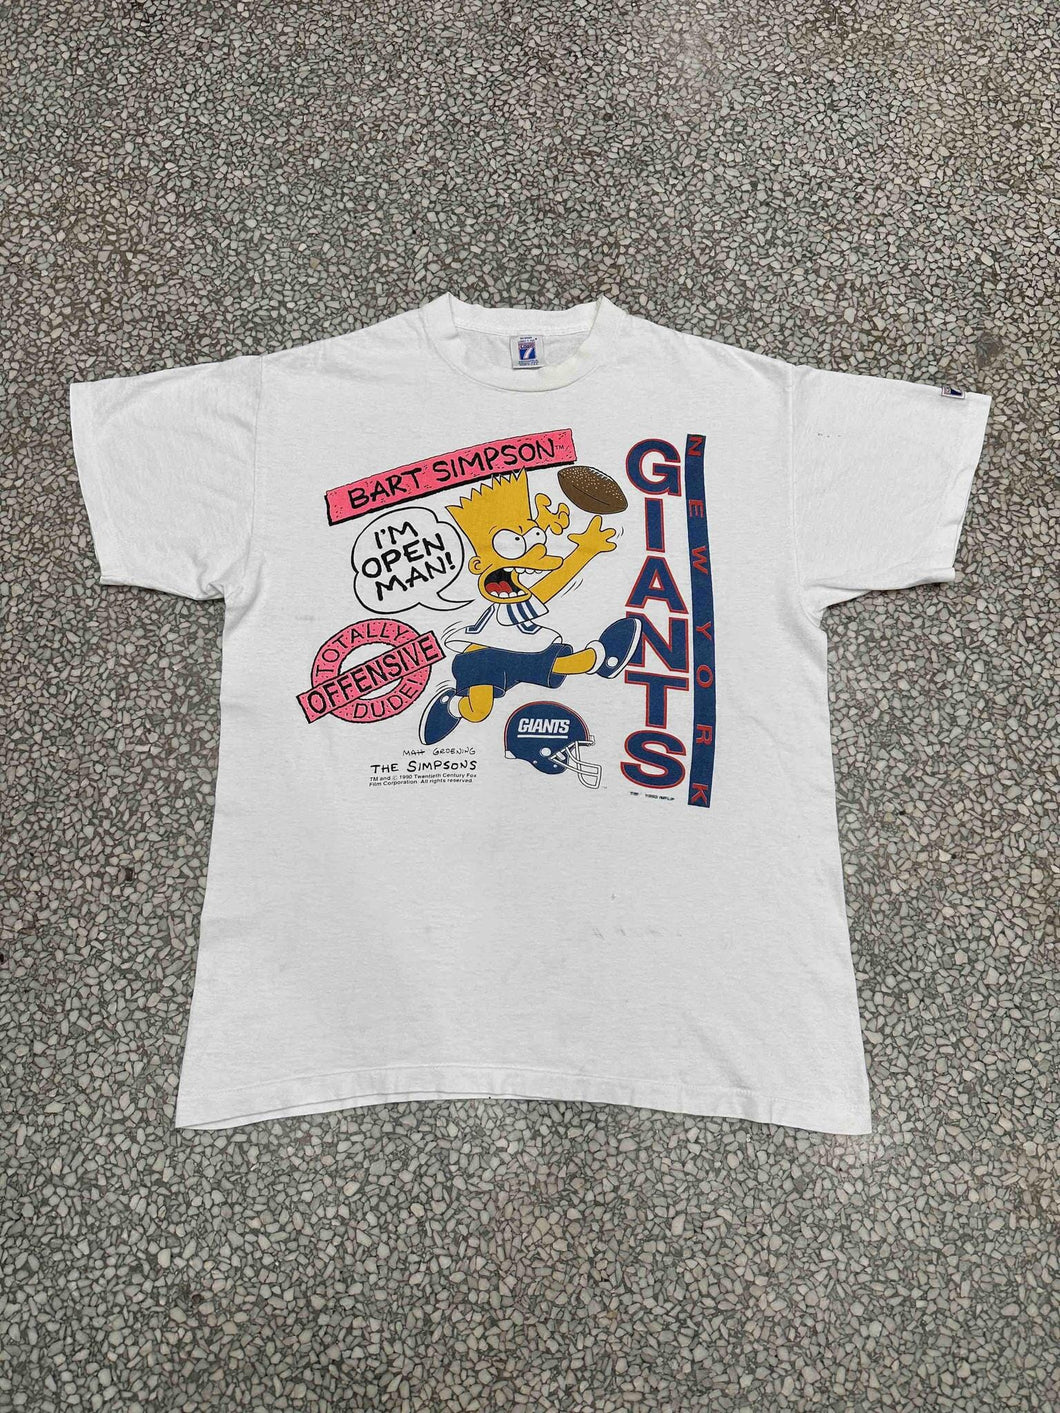 New York Giants Vintage 1990 Bart Simpson ABC Vintage 